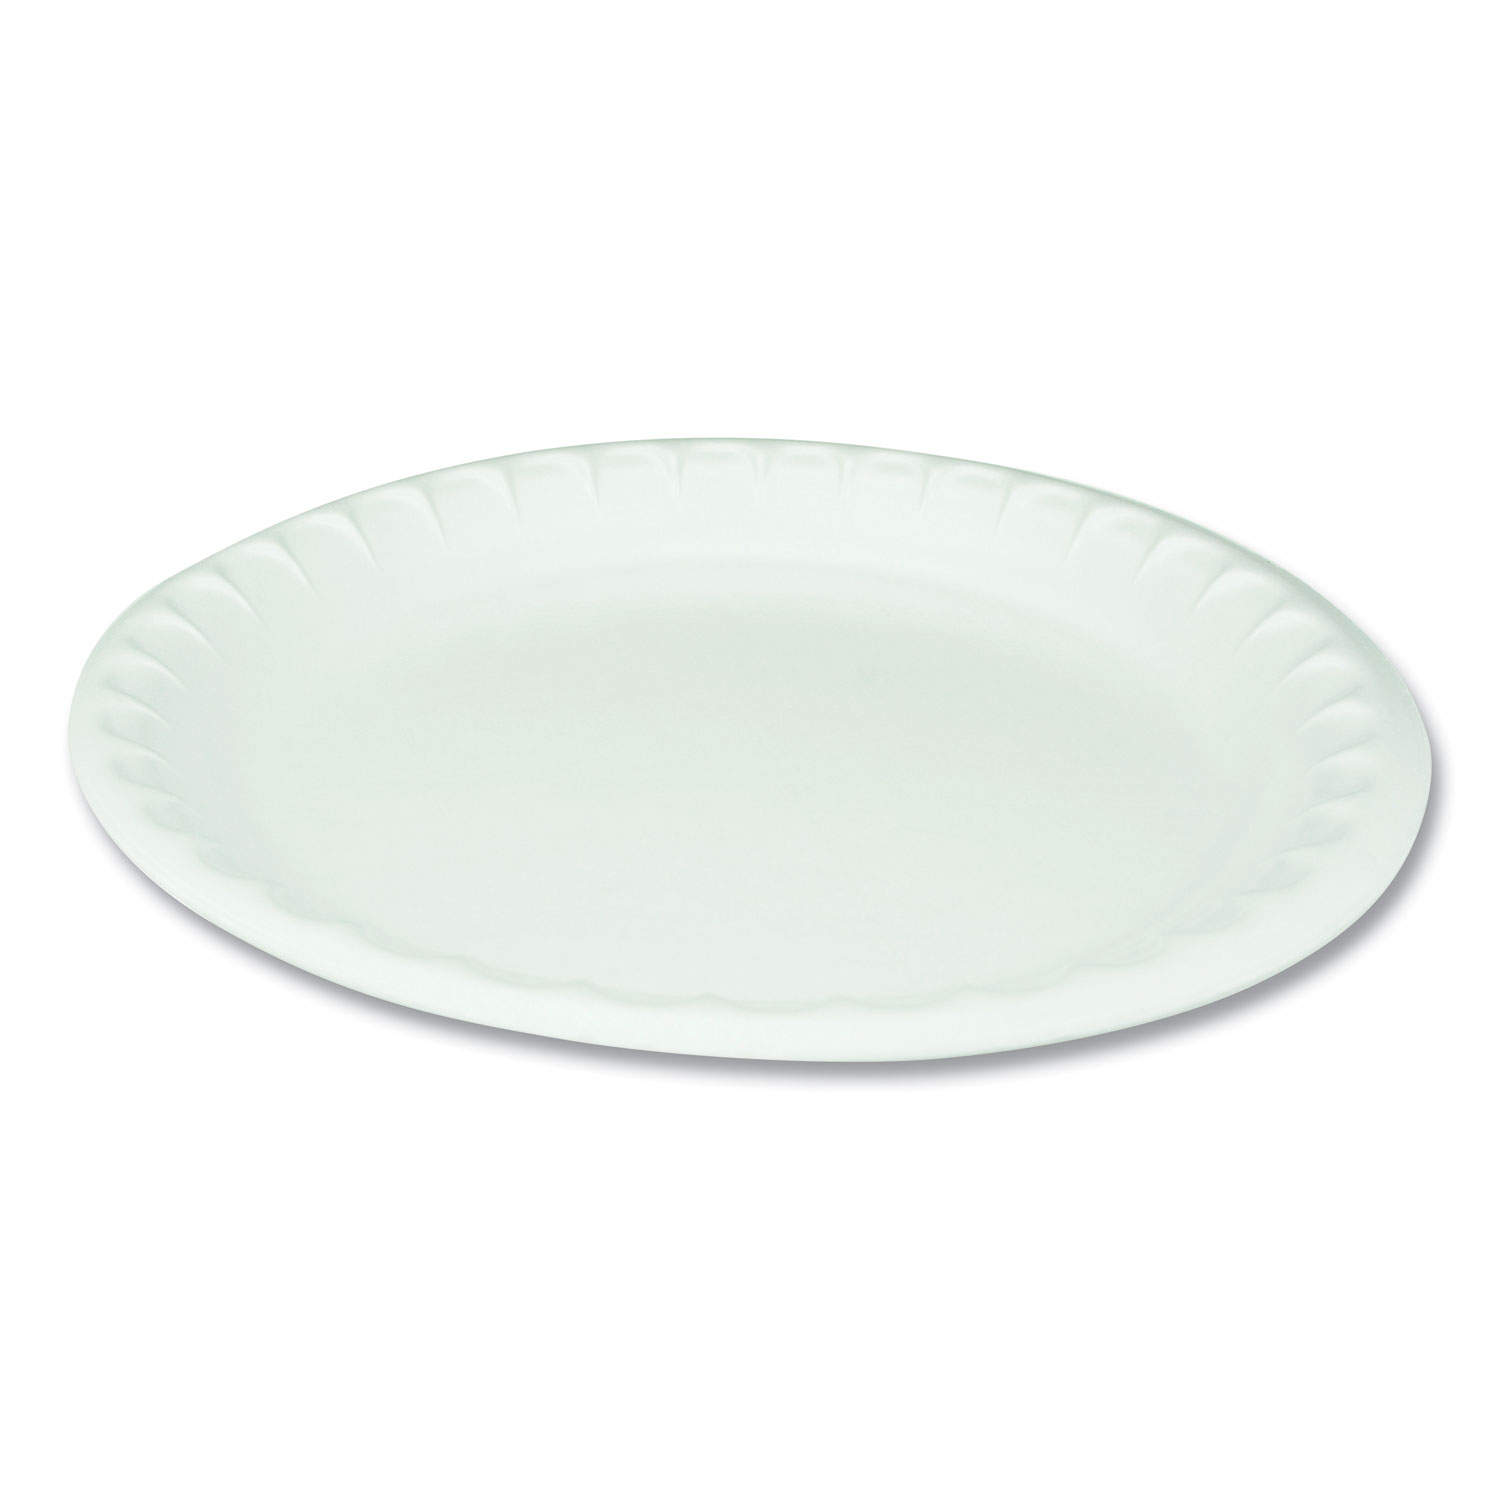 Pactiv Unlaminated Foam Dinnerware, Plate, 10.25 Diameter, White, 540/Carton